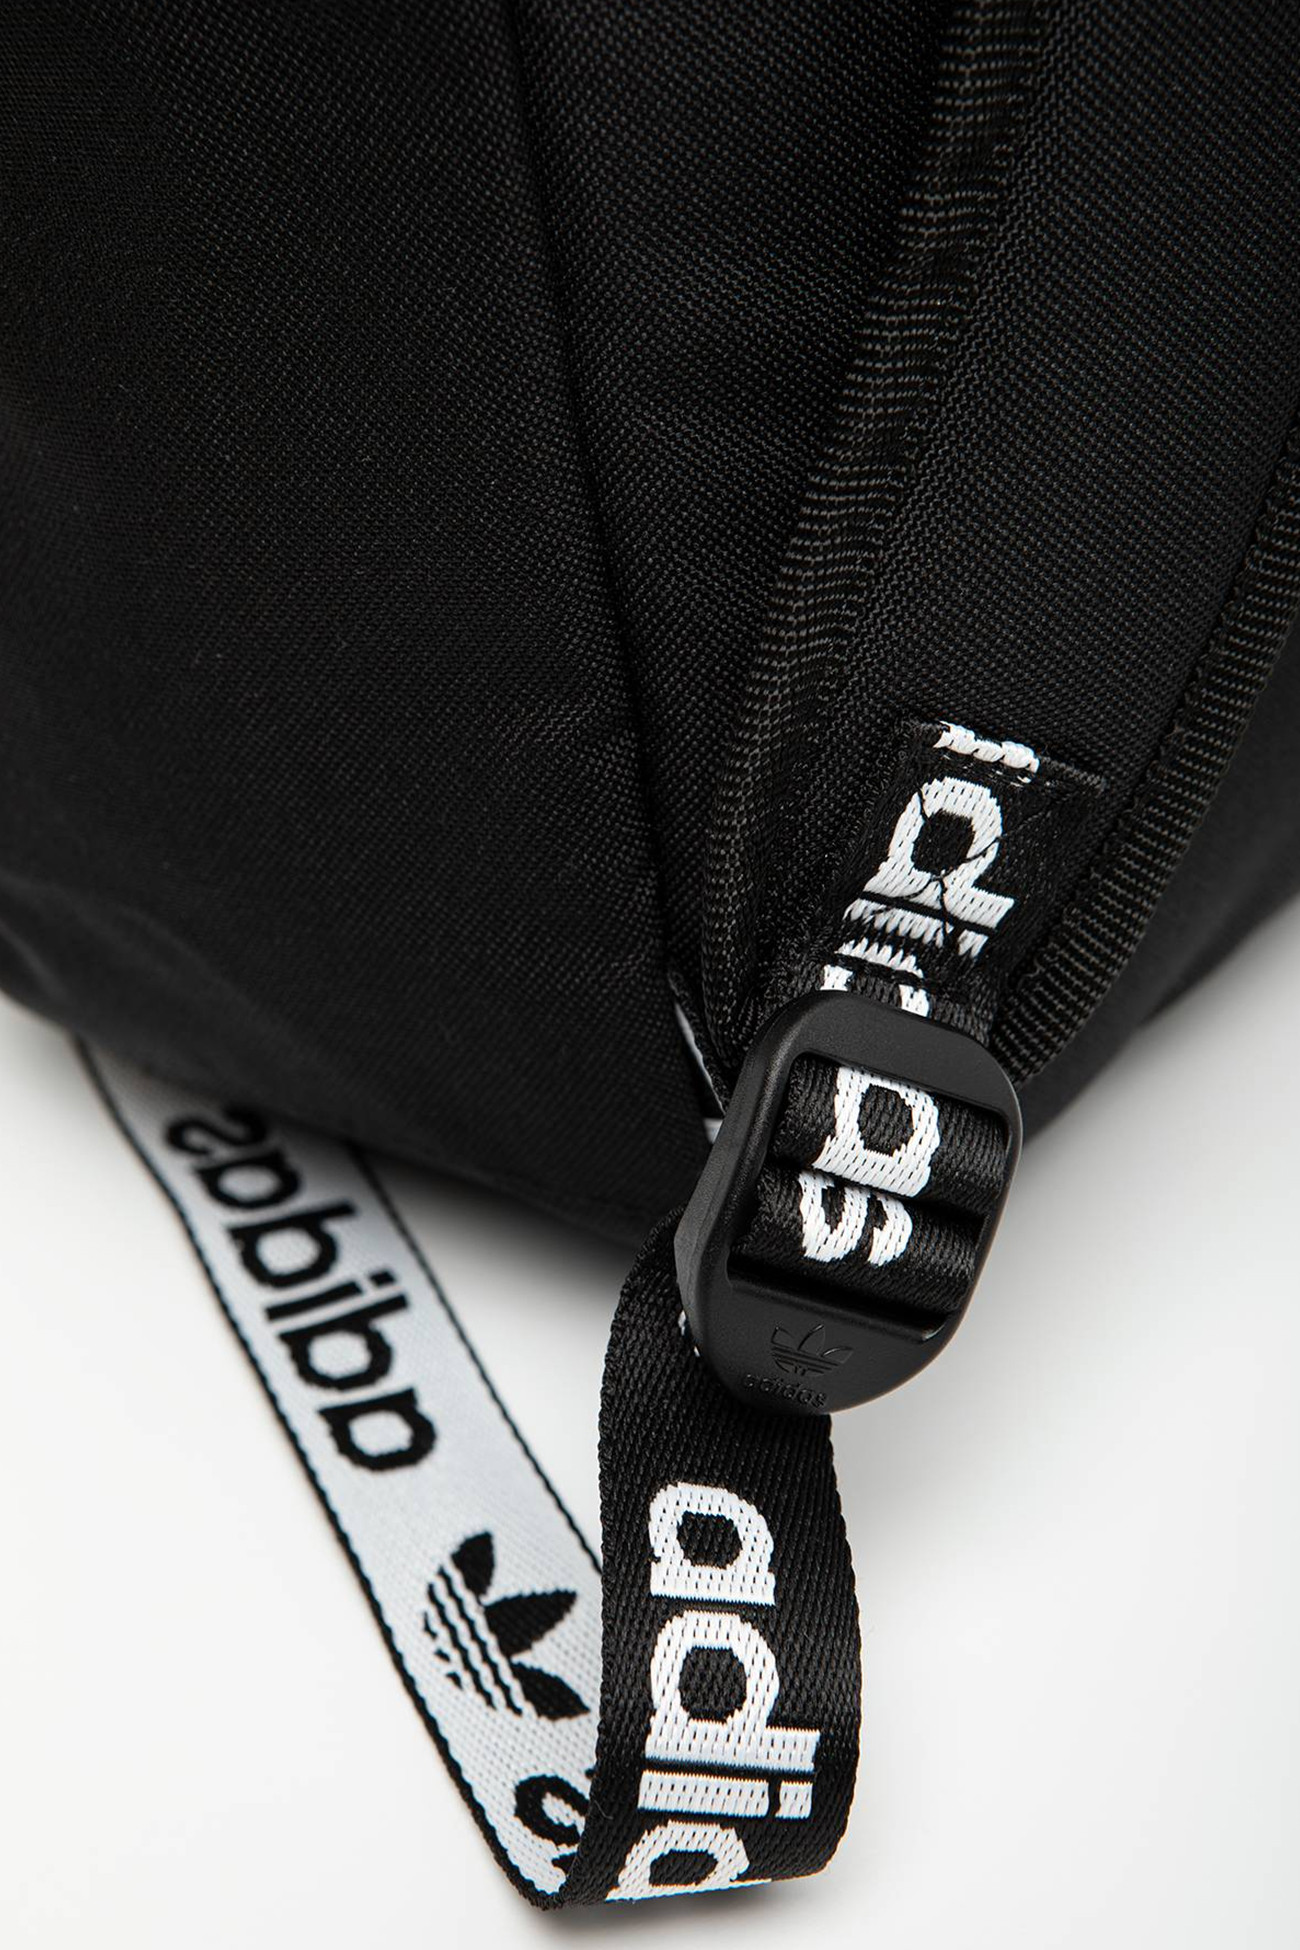 Рюкзак Adidas Adicolor Backpk чорний H35596 